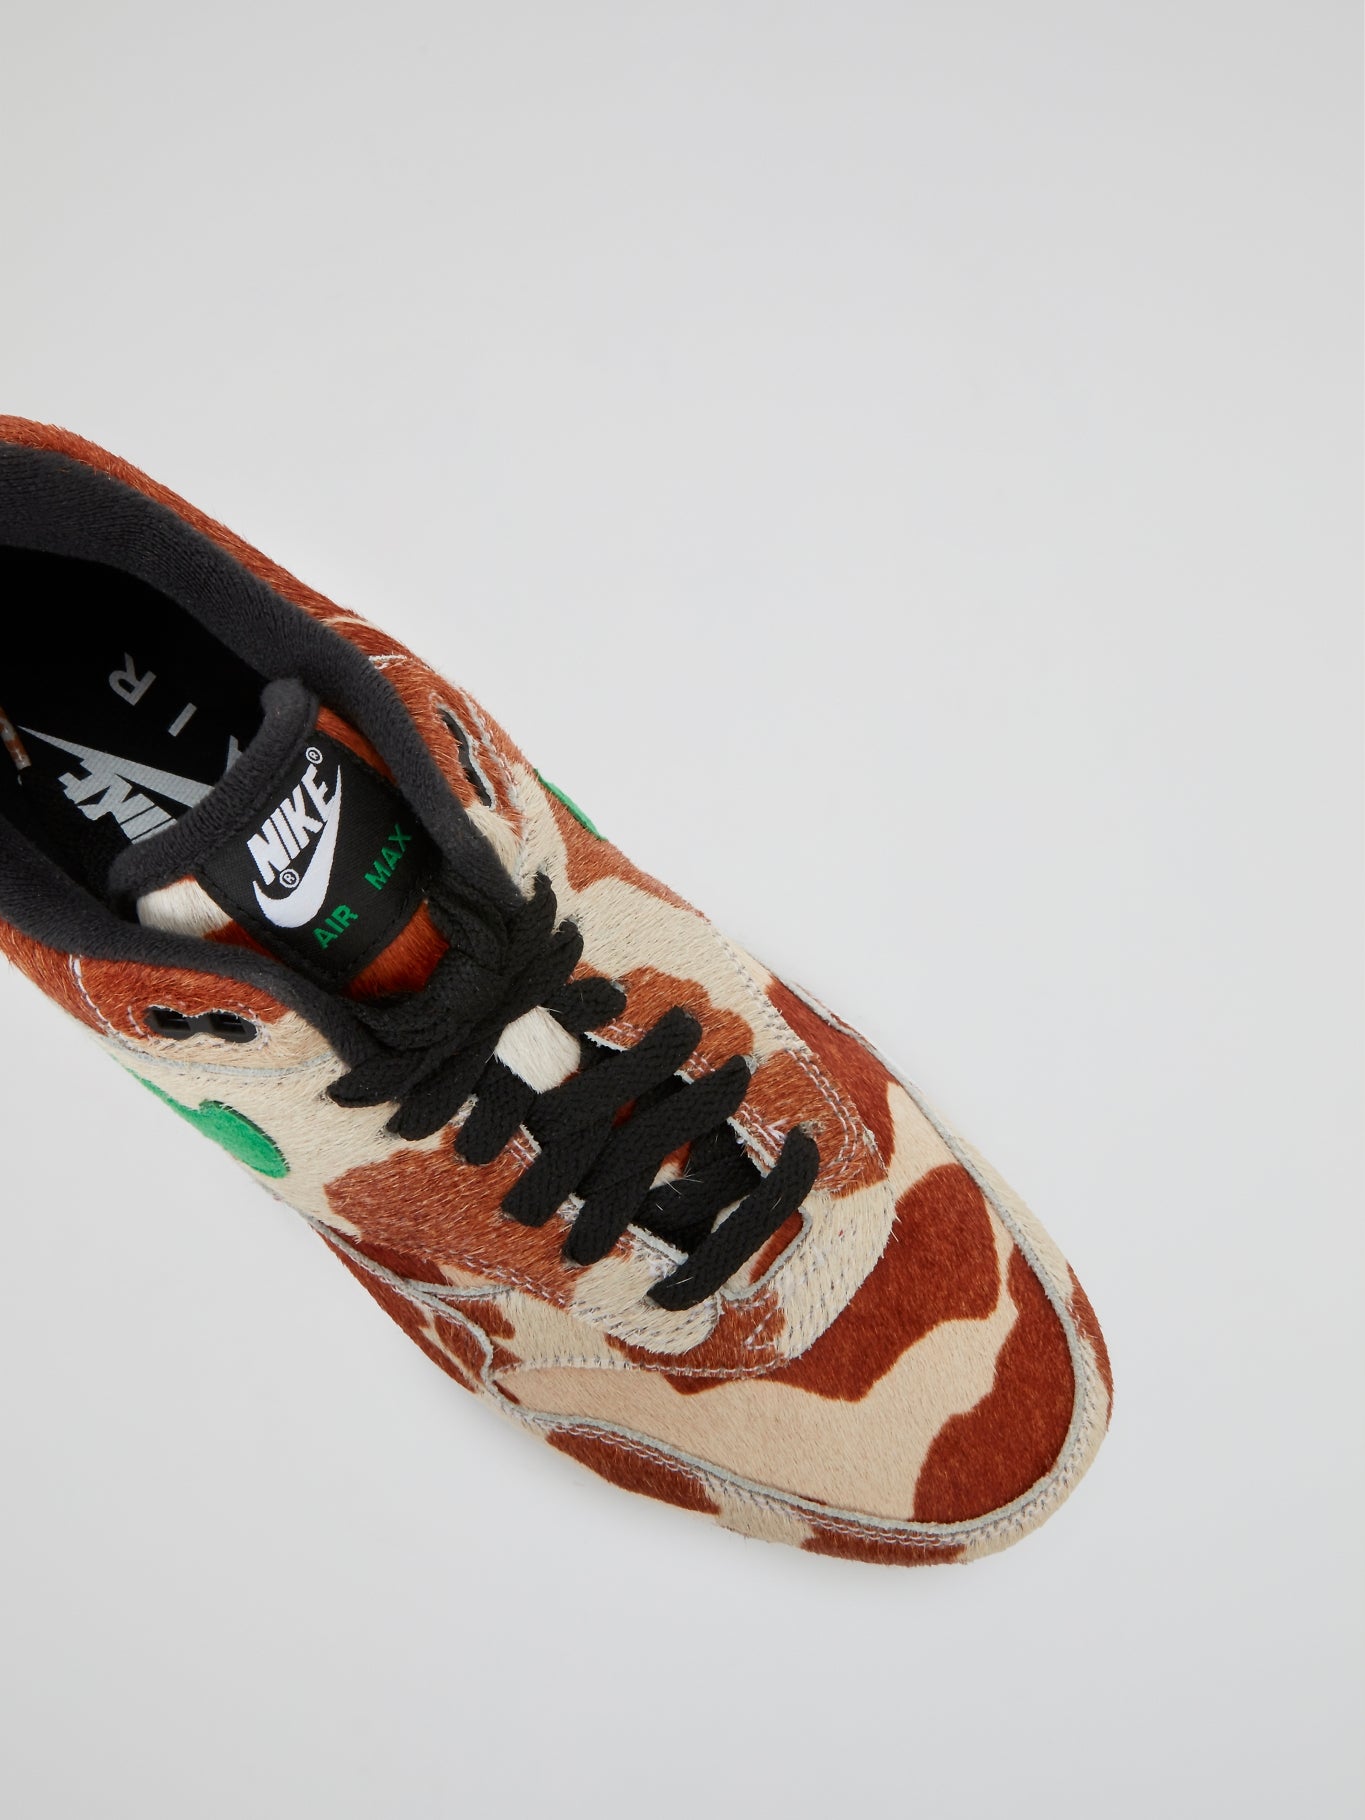 Platteland Blauwe plek decaan Atmos x Air Max 1 DLX Animal Pack Sneakers (Size 9) – Maison-B-More Global  Store